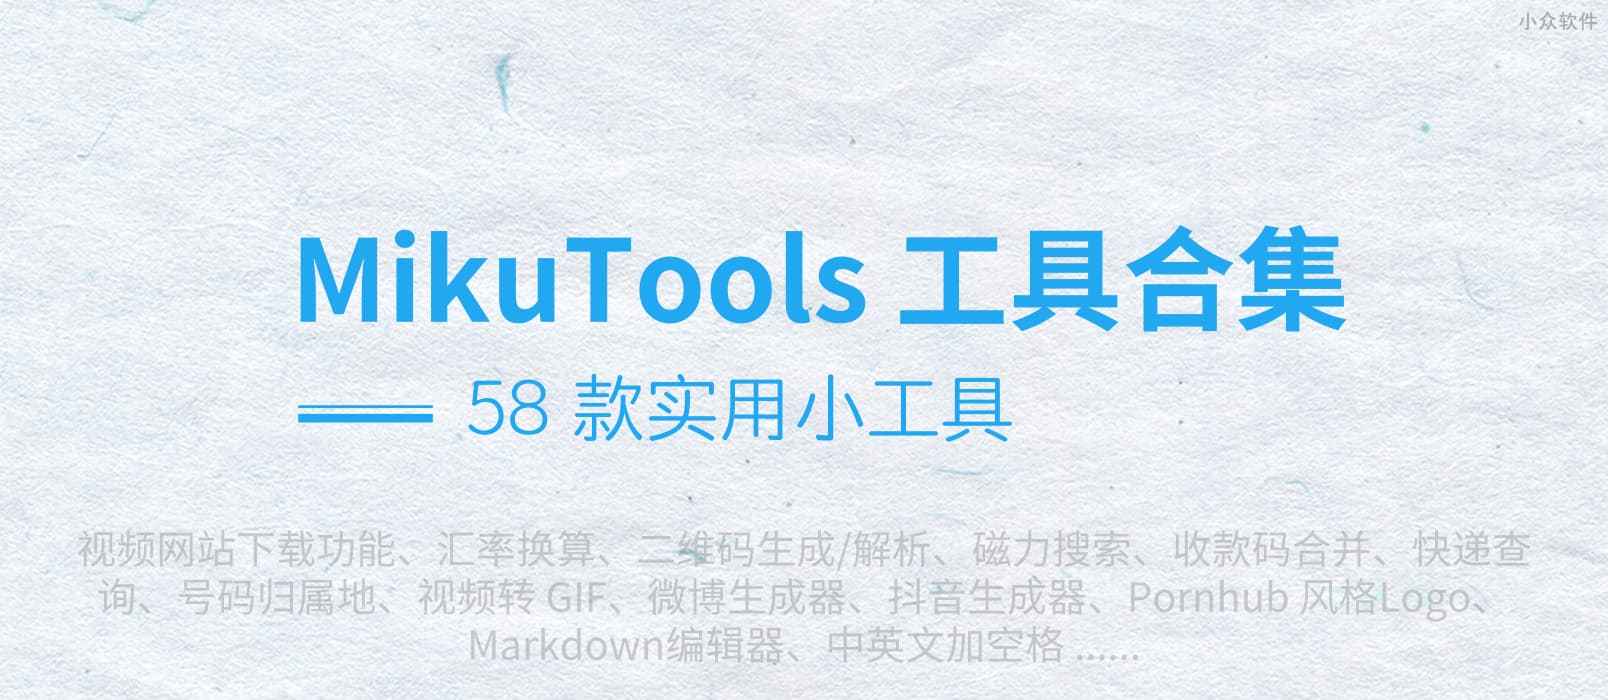 MikuTools – 58 款小工具合集：视频下载、磁力搜索、实用工具、文字处理等